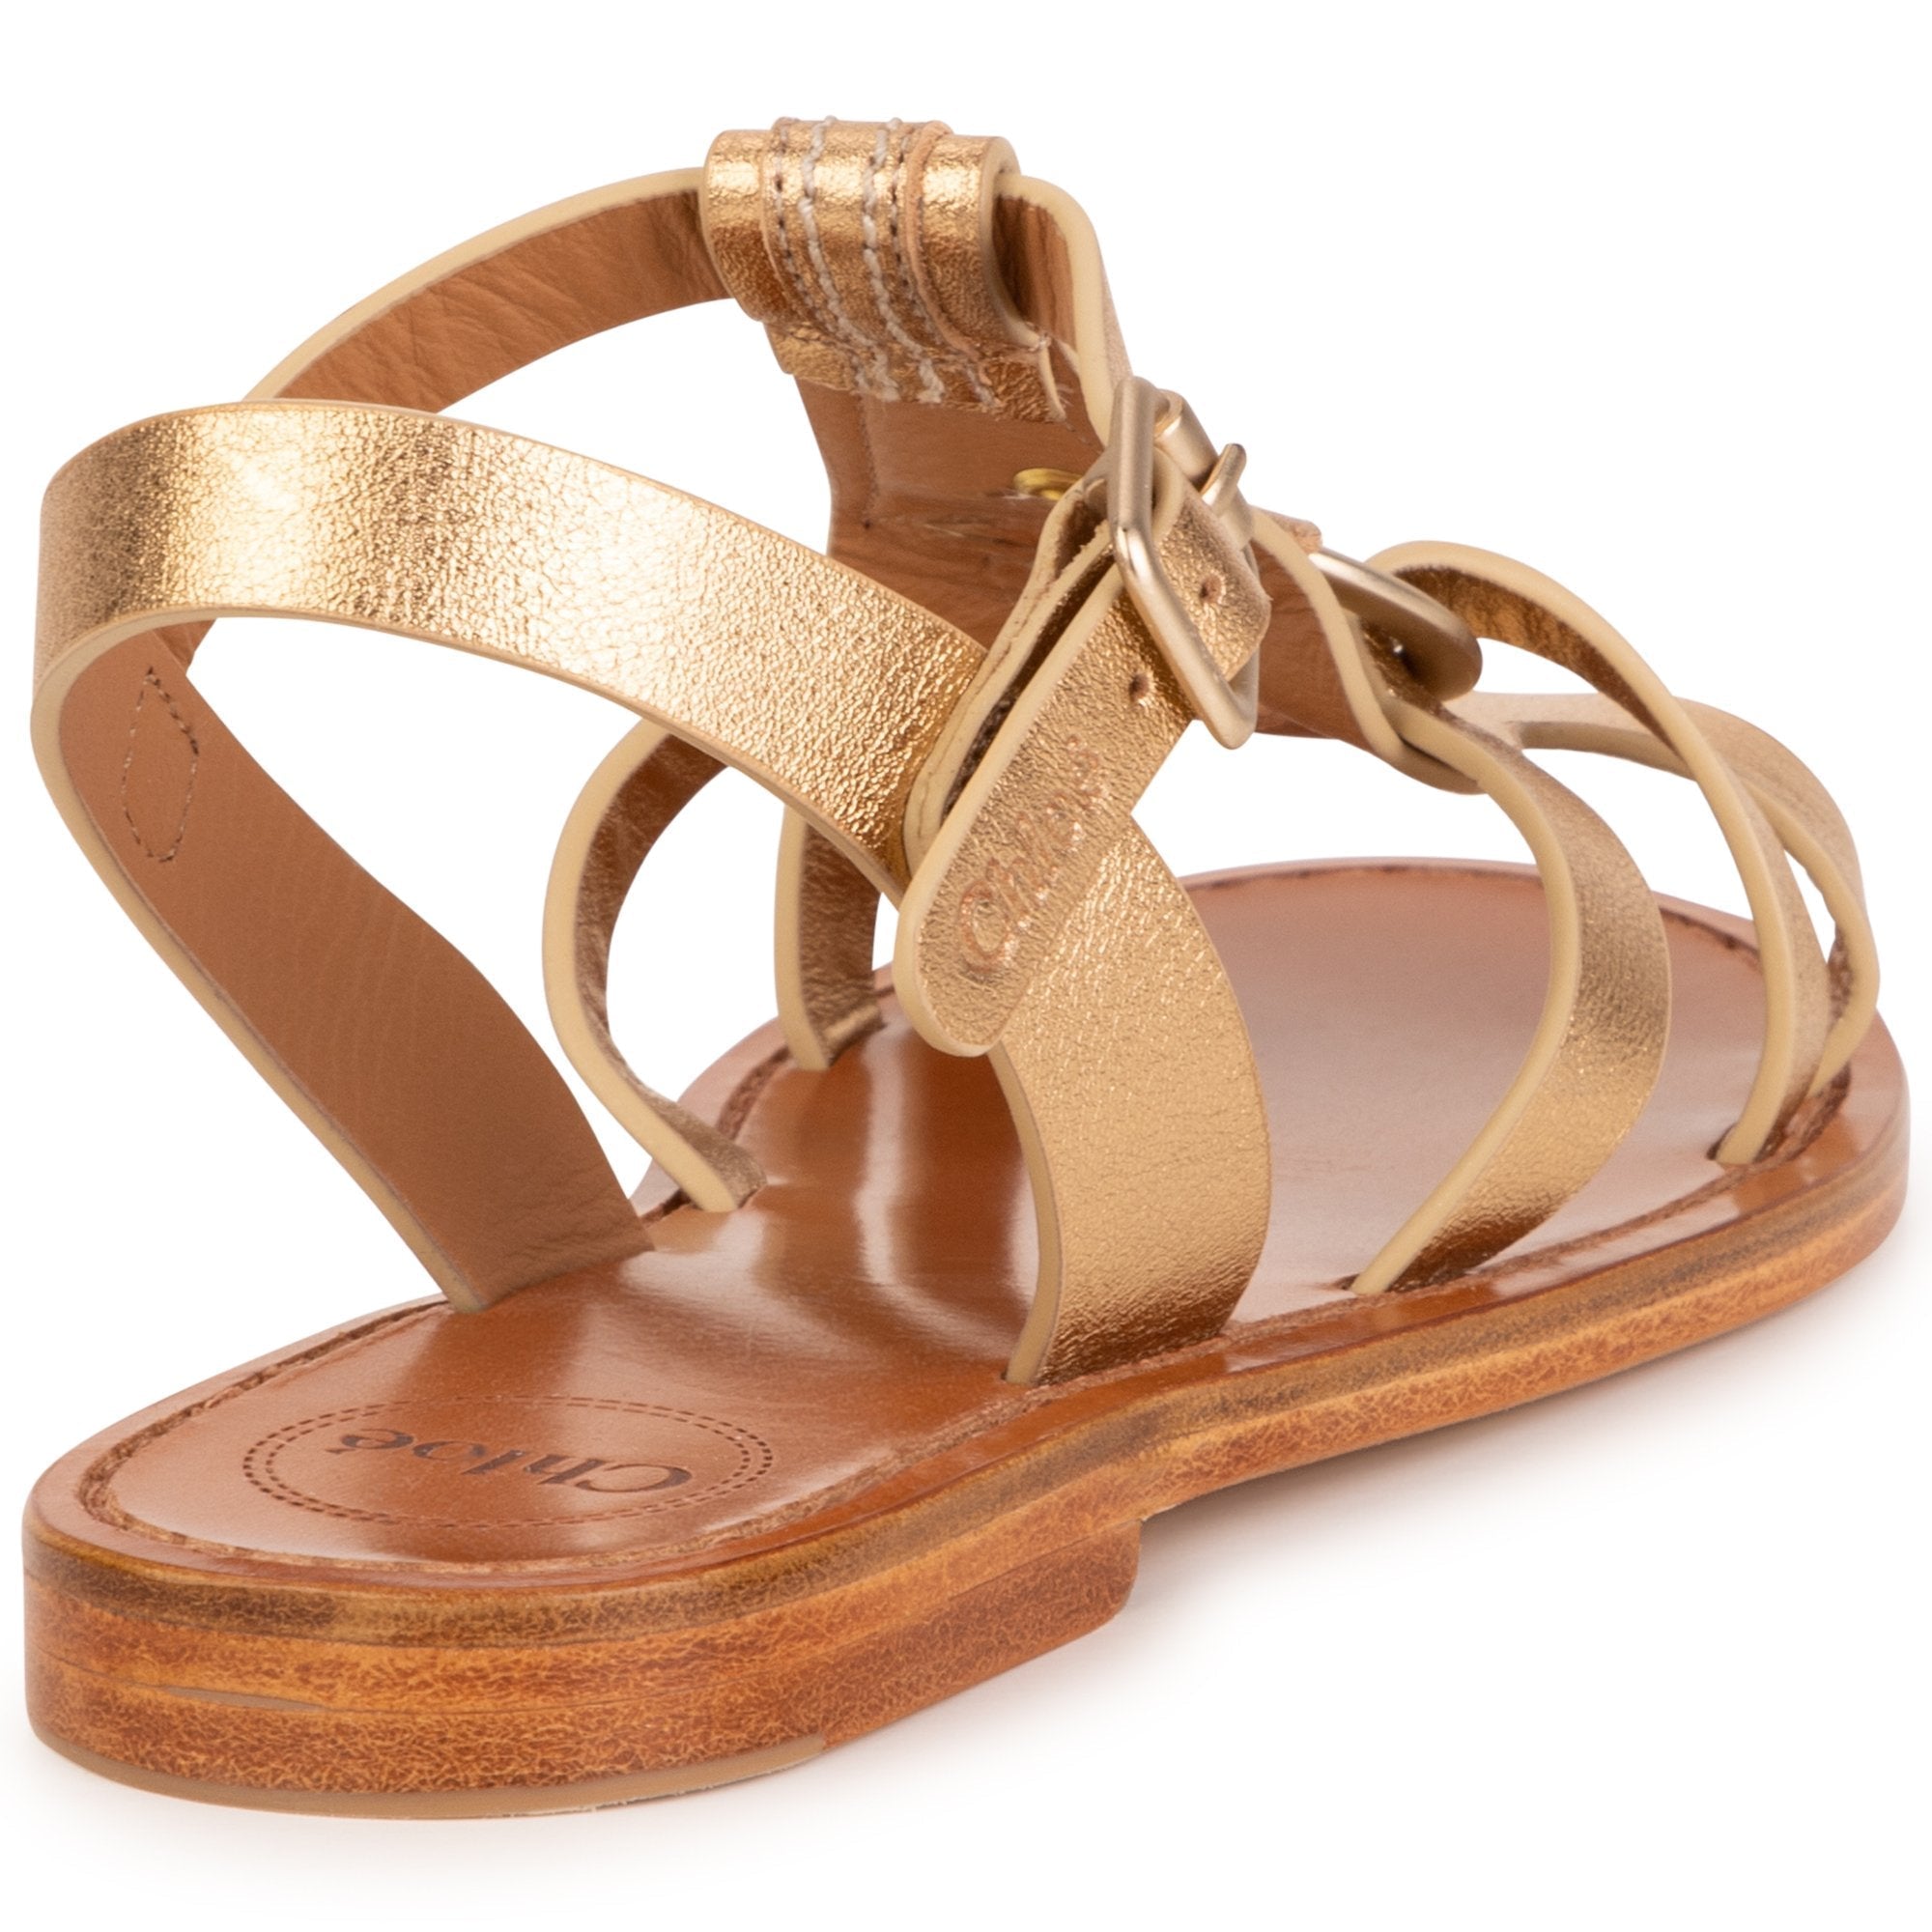 Chloe Girls Gold Sandals